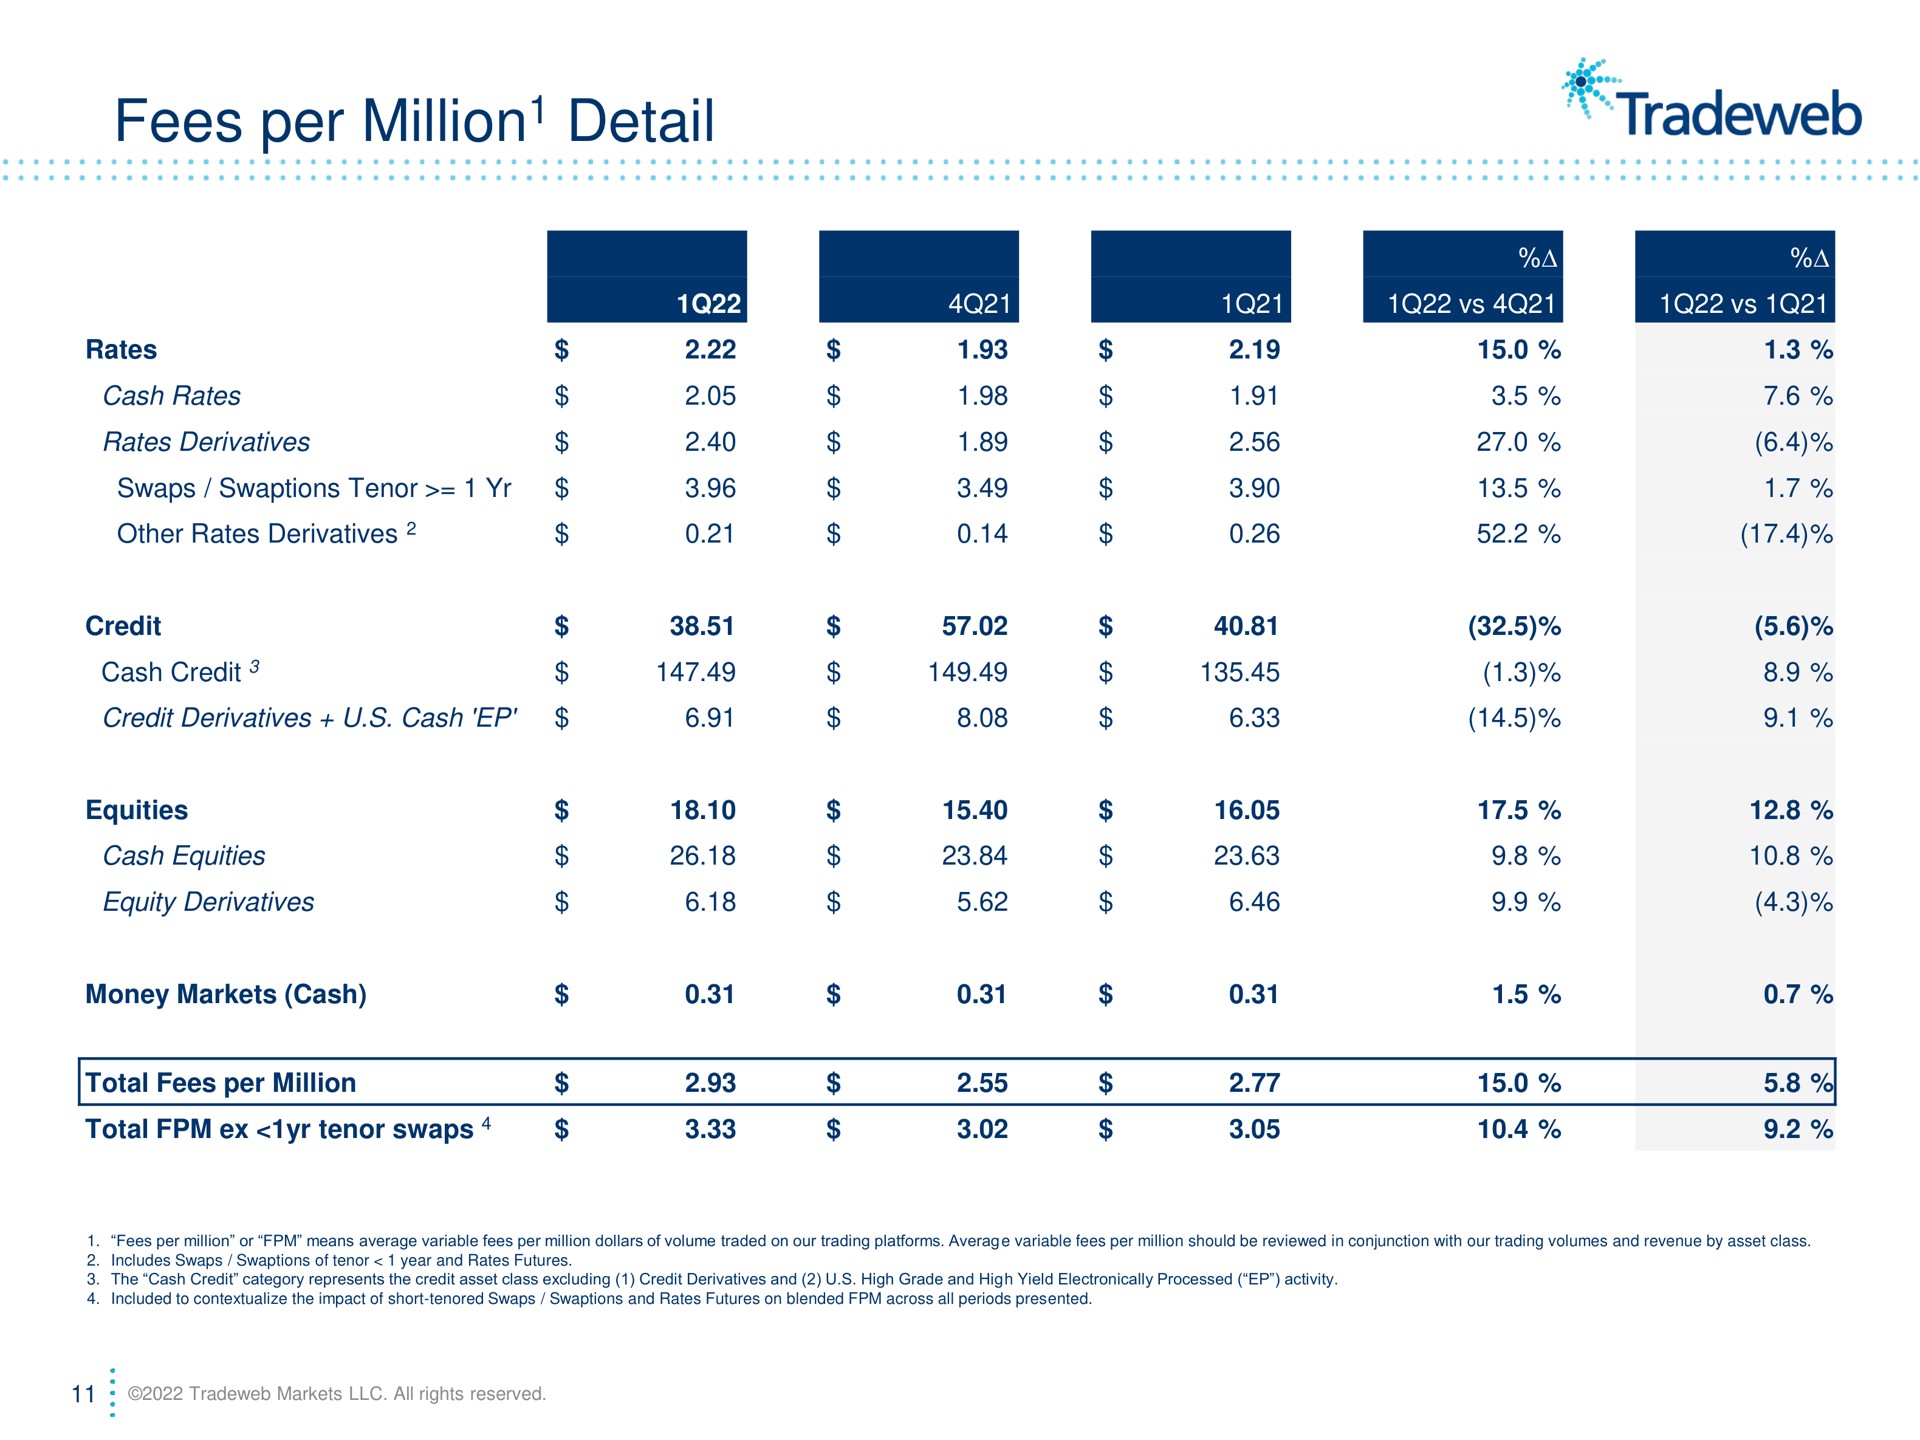 fees per million detail million | Tradeweb